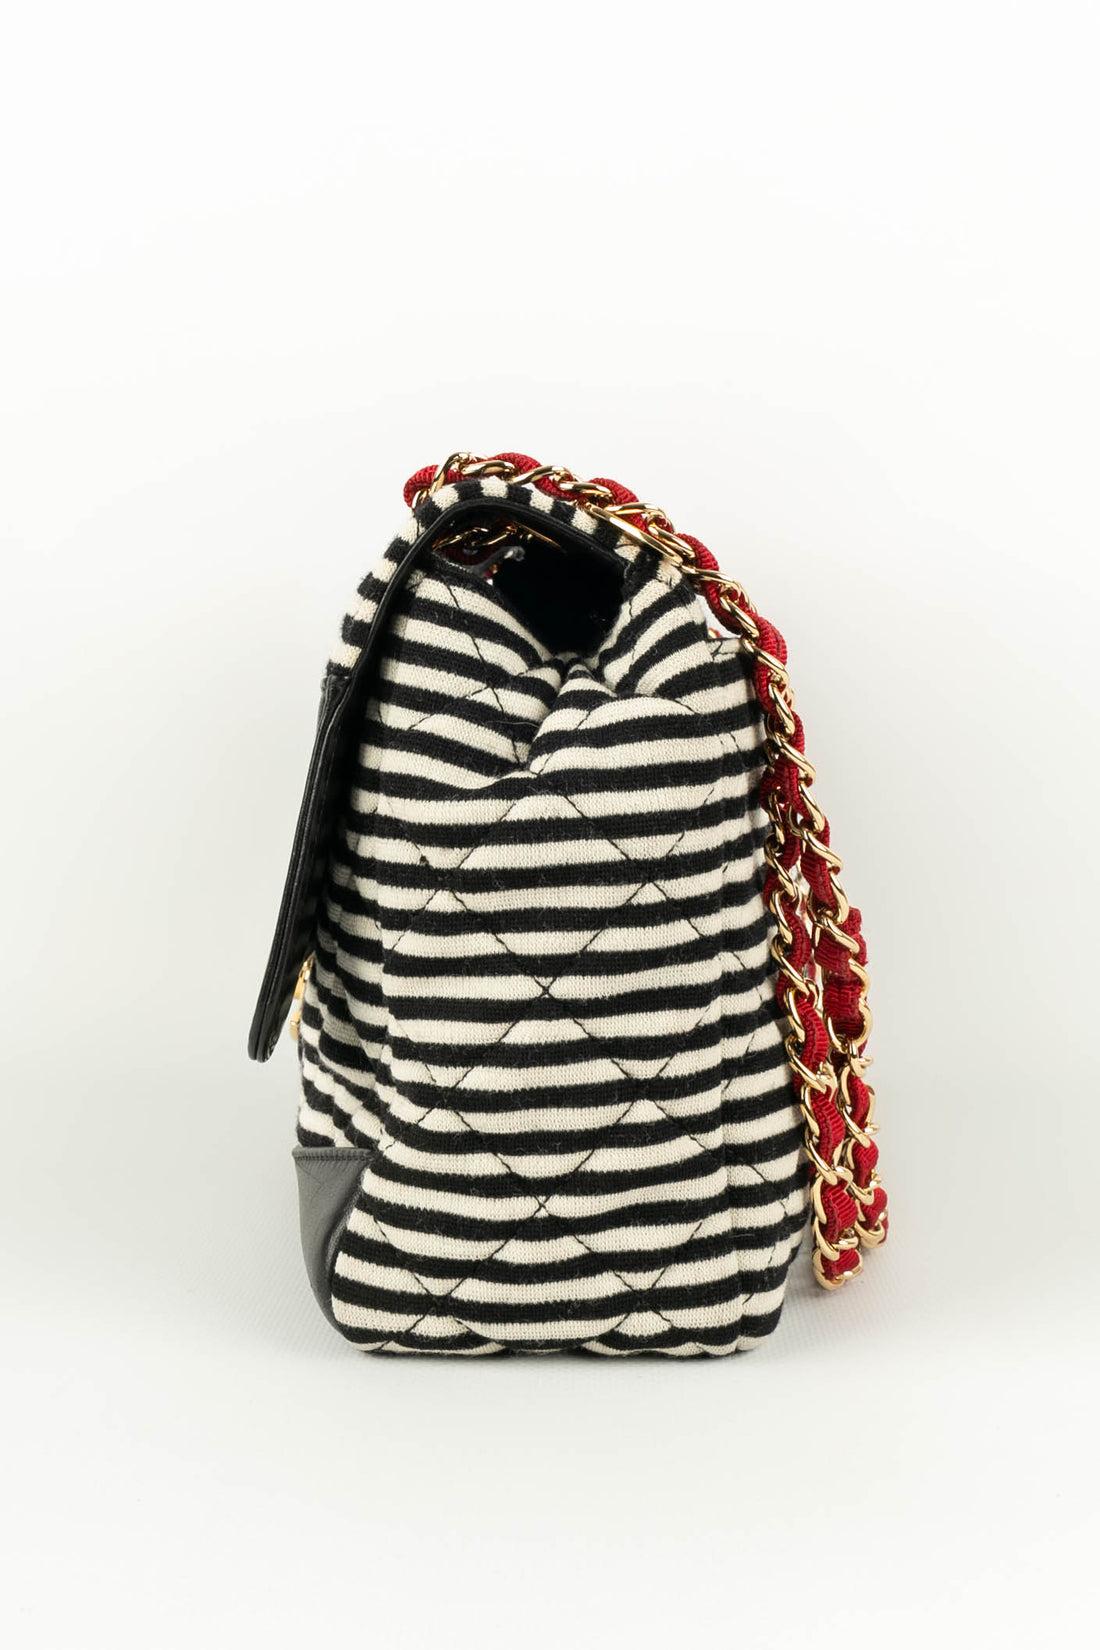 Chanel Black and White Stripes Bag, 2014 1